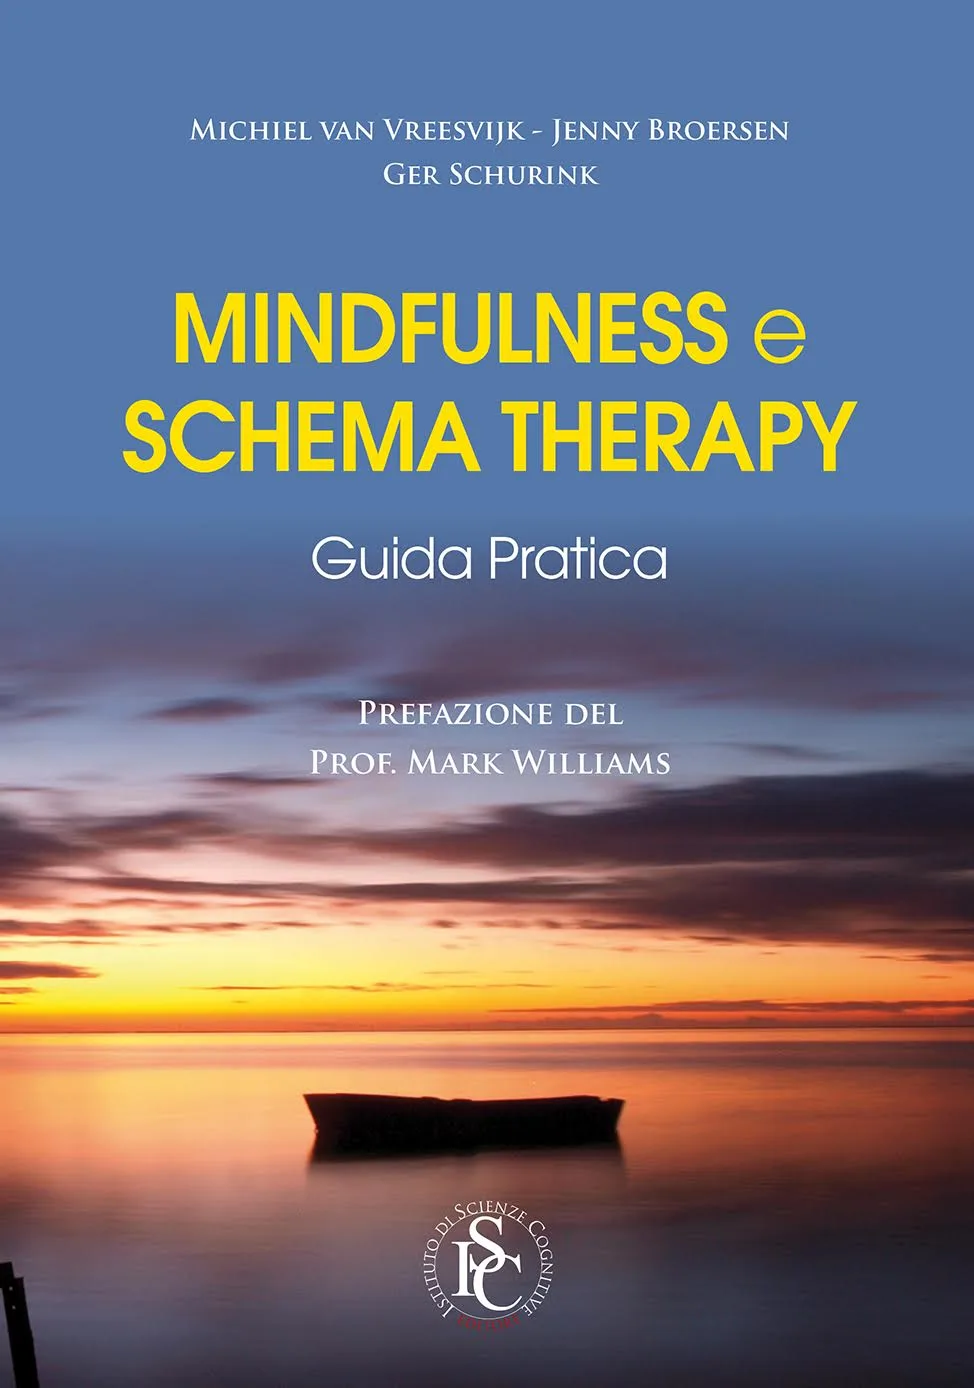 Mindfulness e schema therapy: guida pratica - Recensione